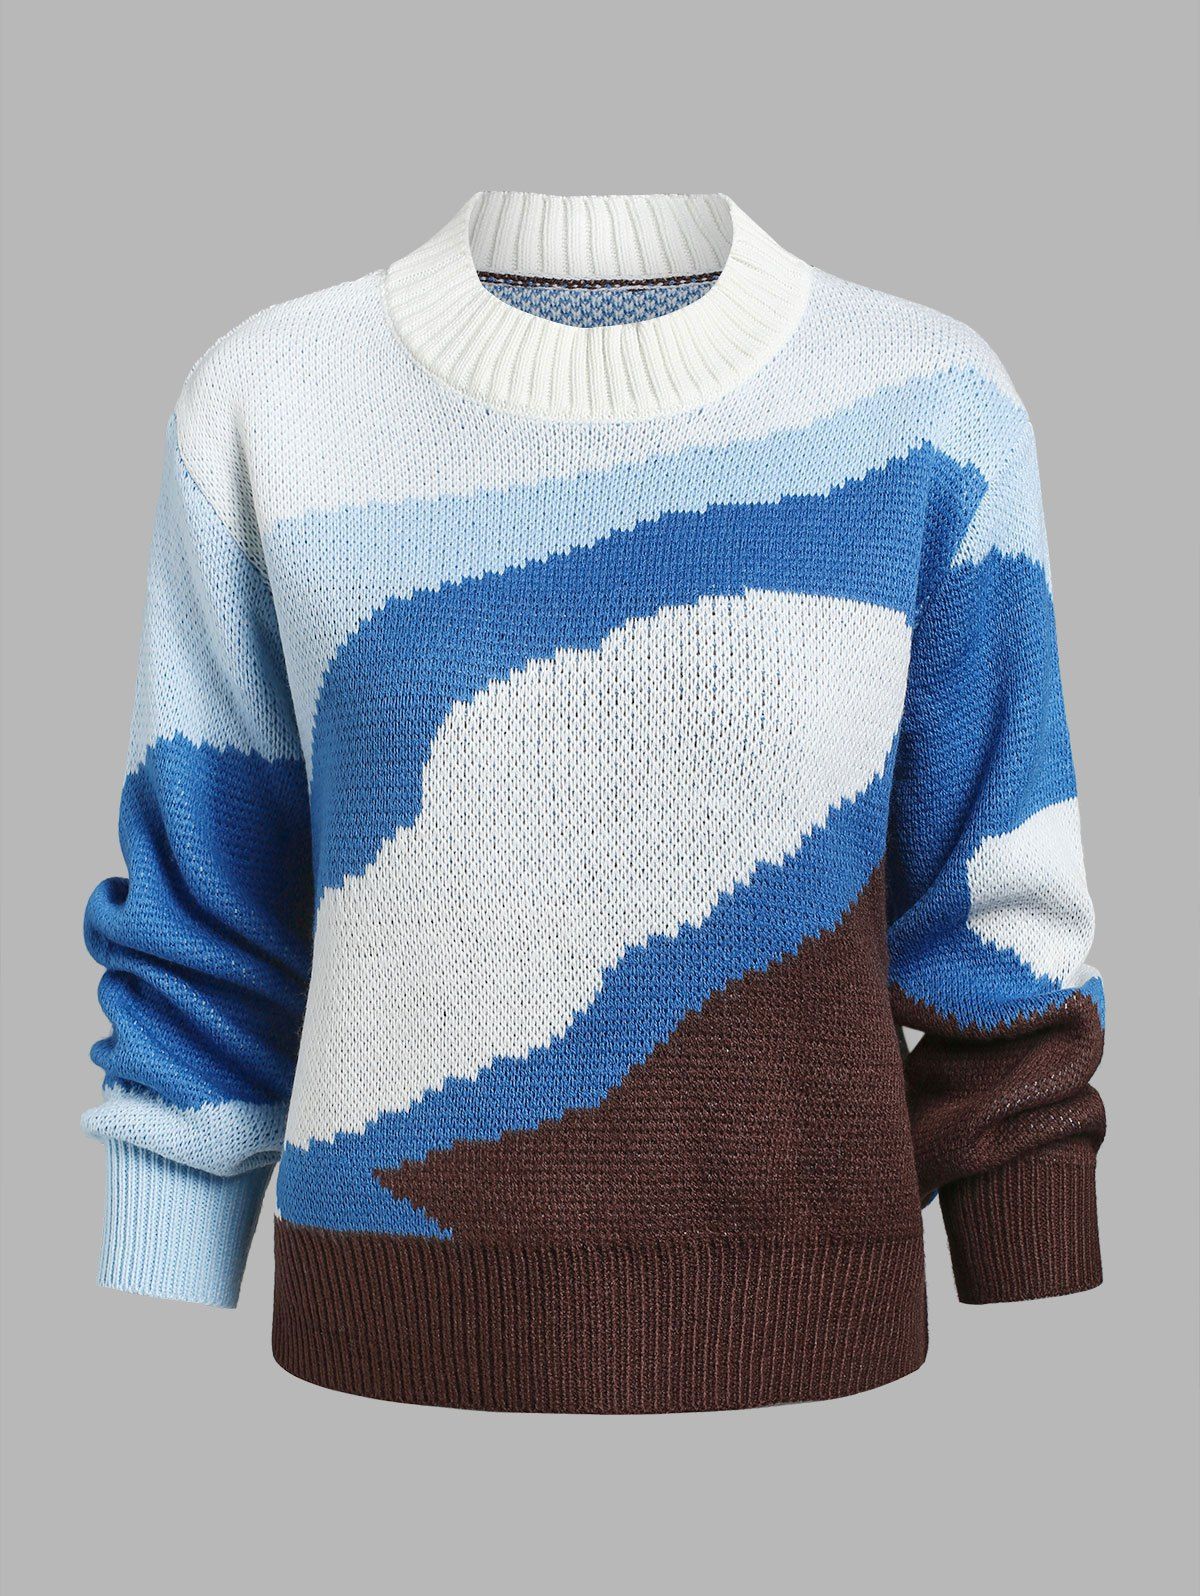 Mock Neck Colorblock Psychedelic Sweater - multicolor L